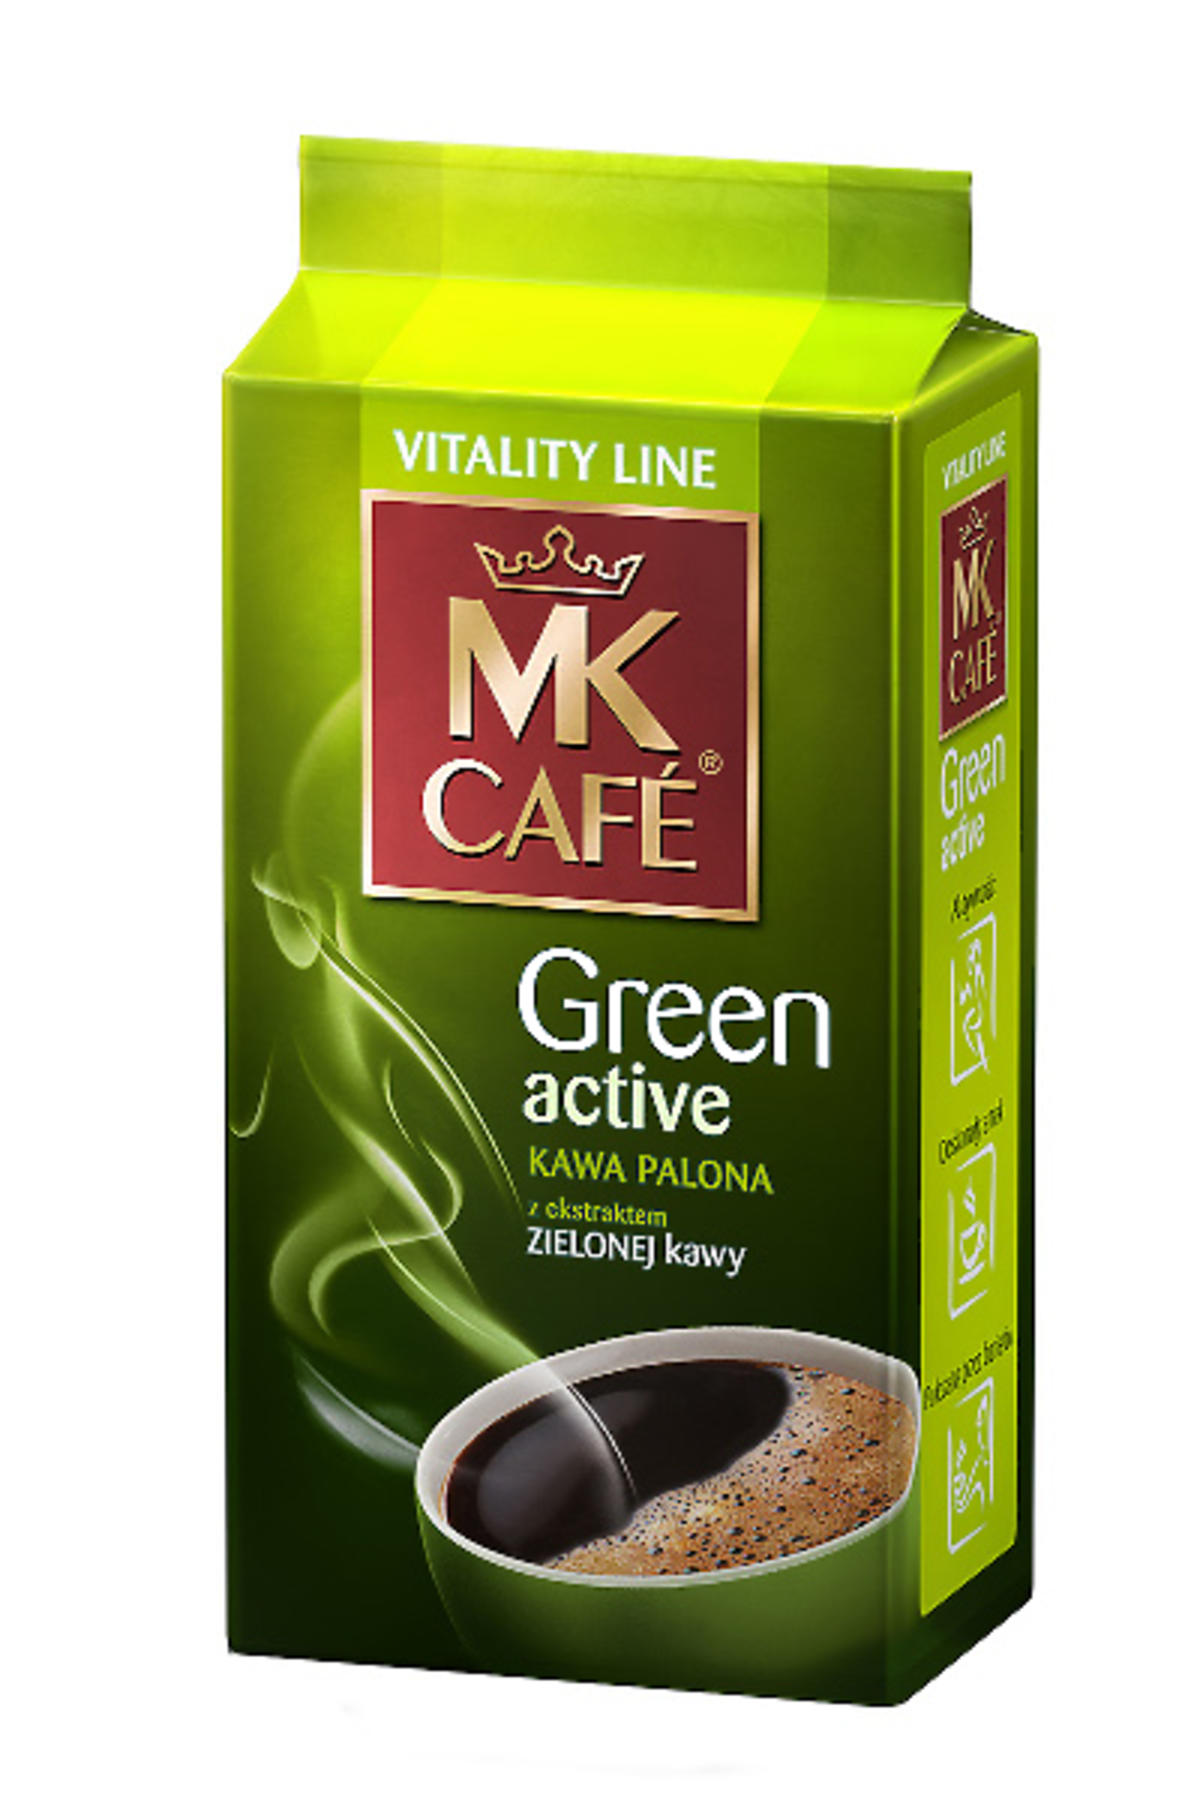 mk cafe green coffee